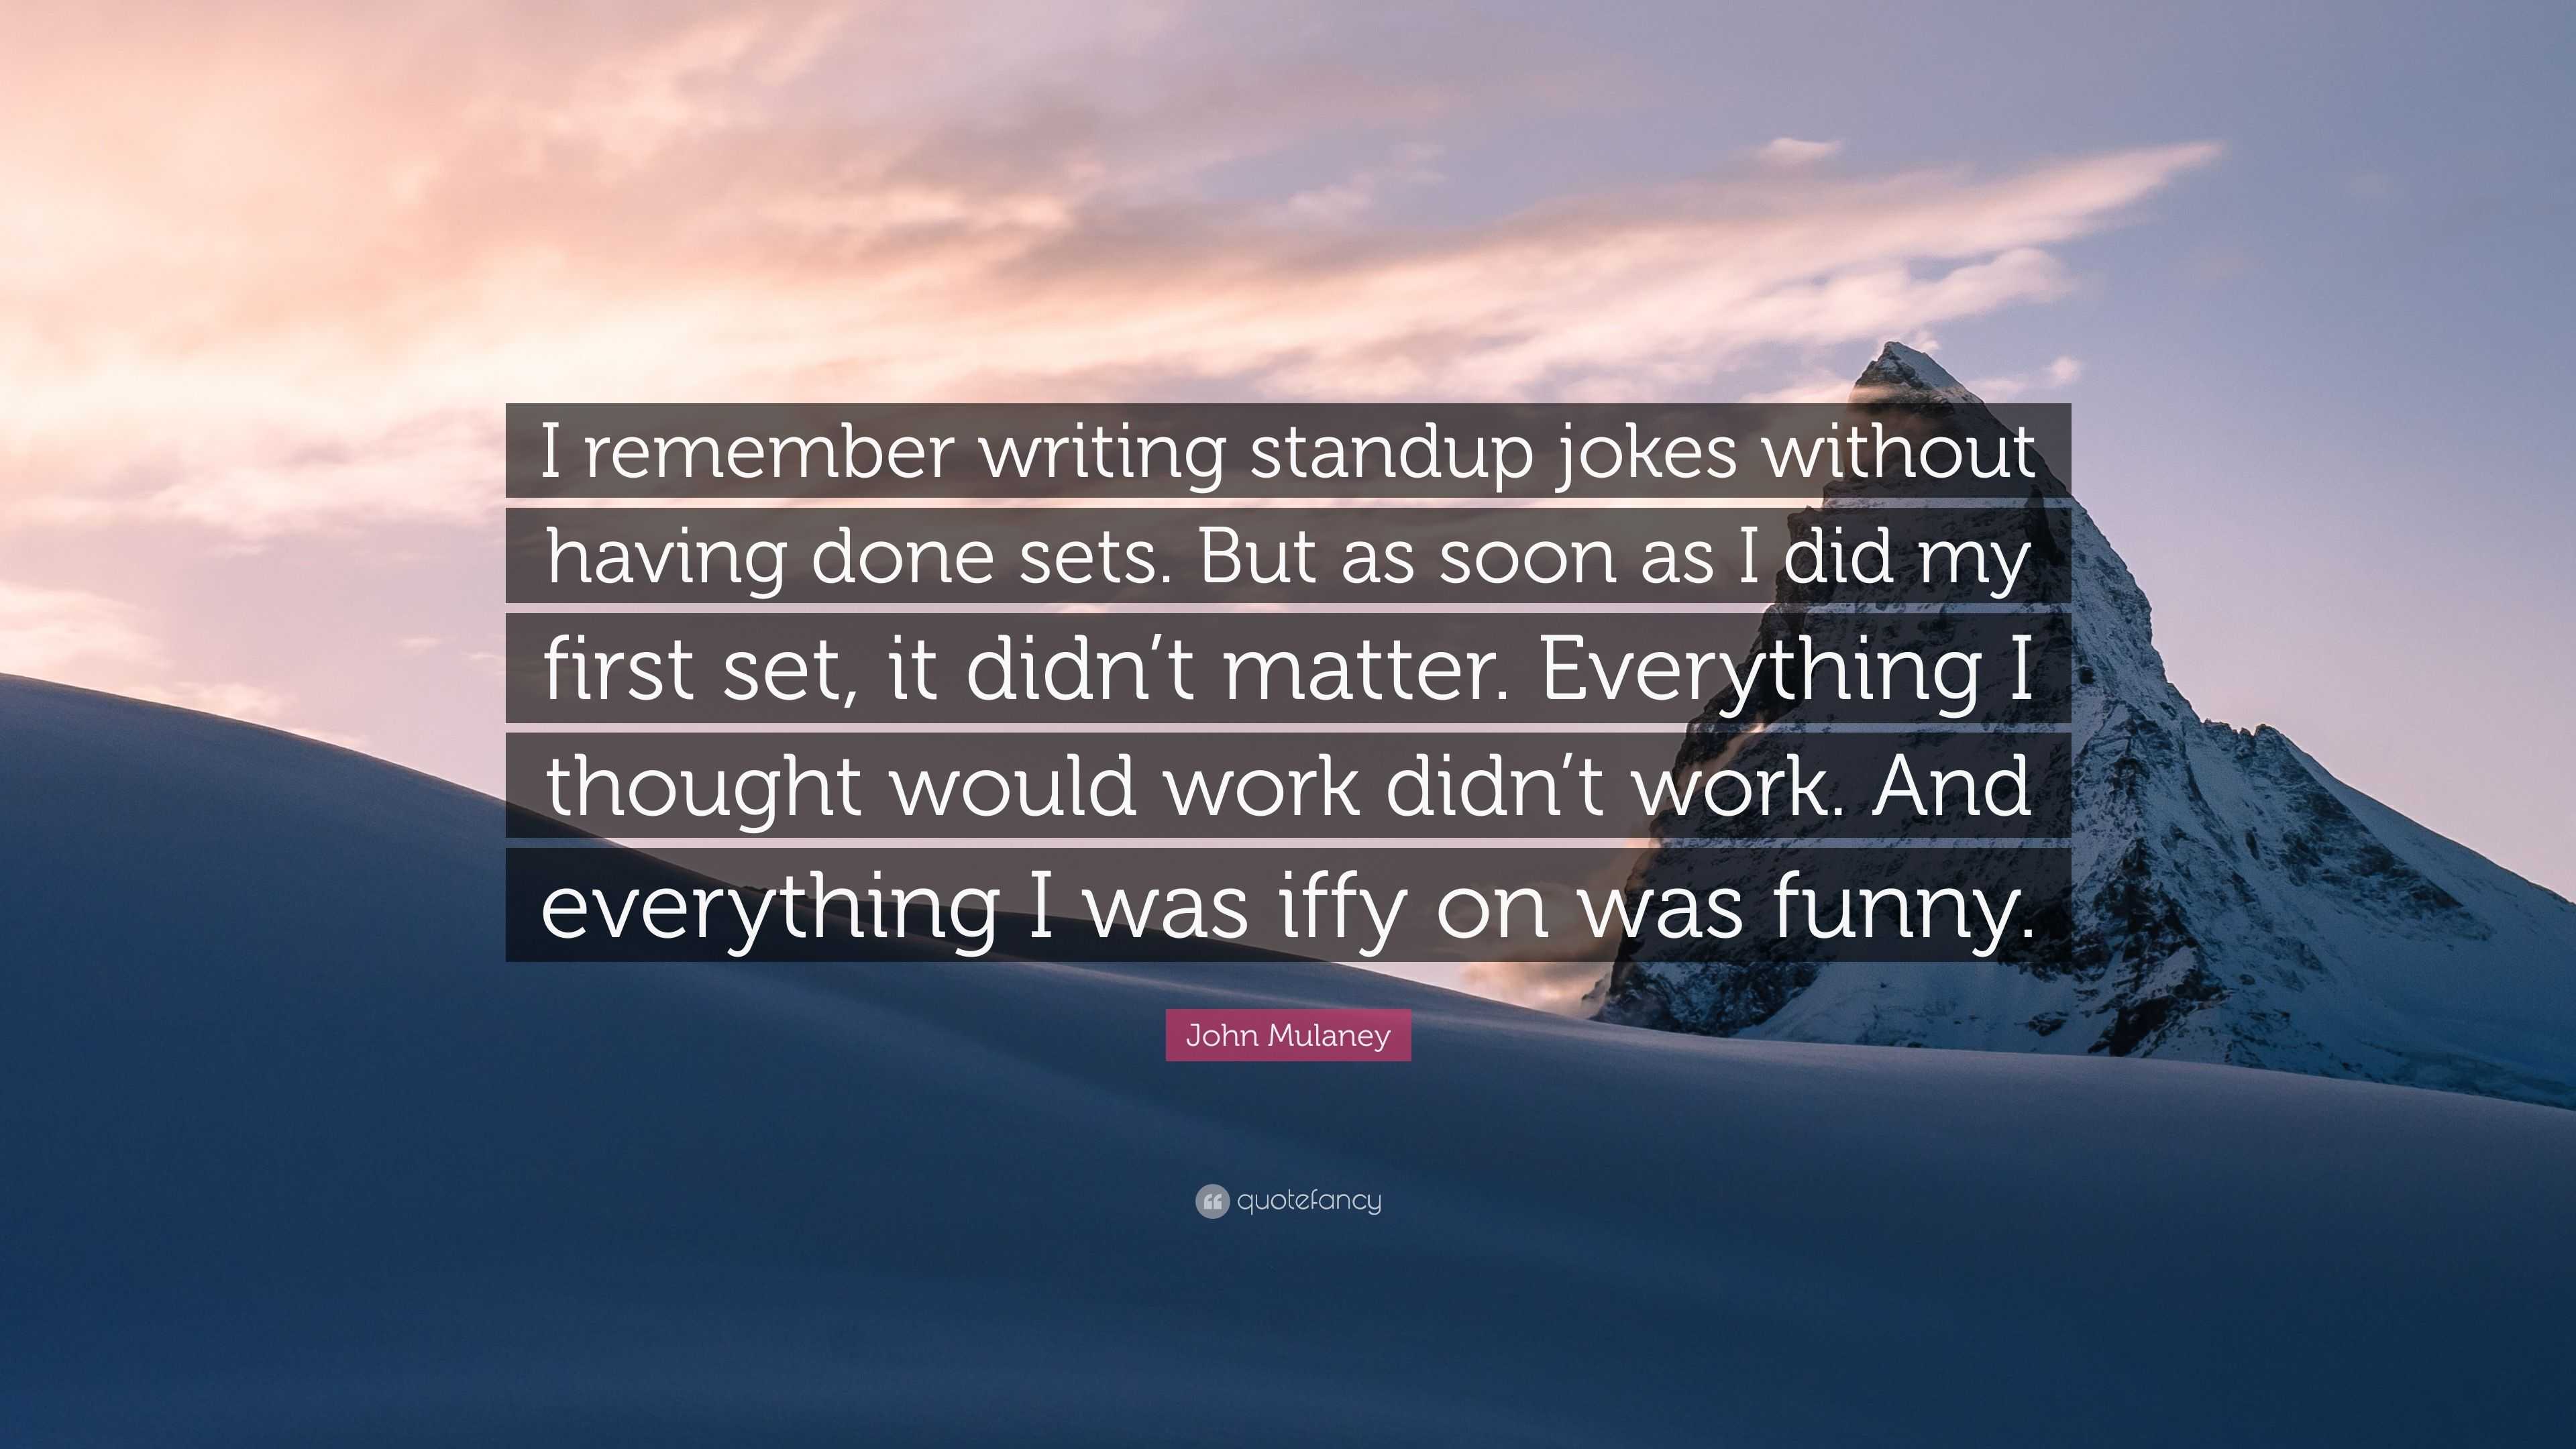 John Mulaney Quote: "I remember writing standup jokes ...